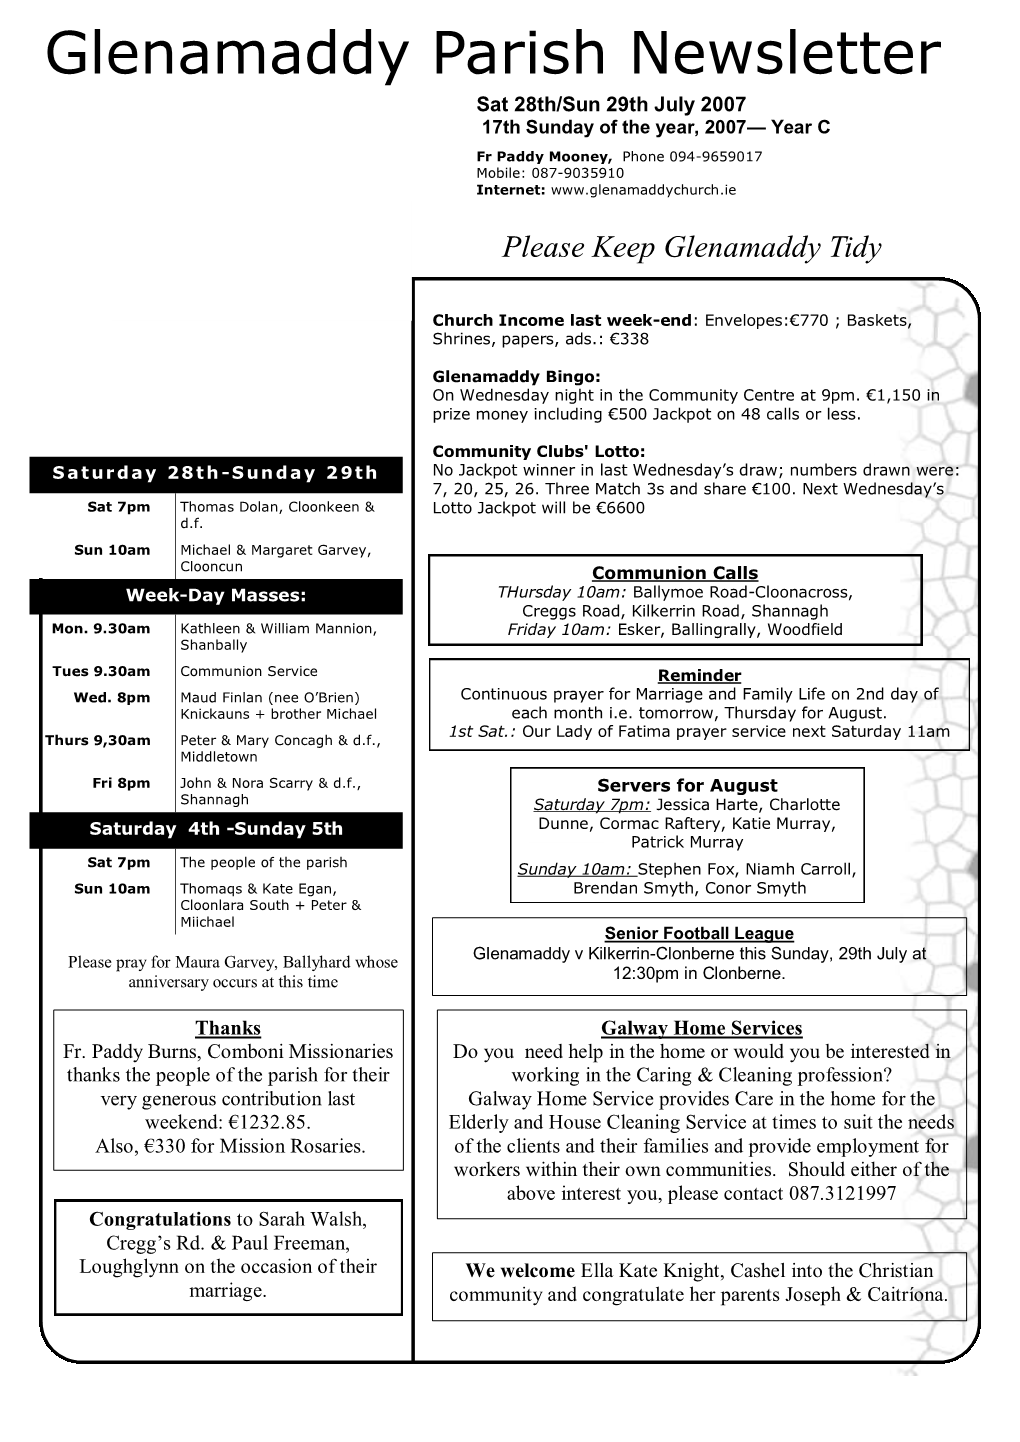 Glenamaddy Parish Newsletter Sat 28Th/Sun 29Th July 2007 17Th Sunday of the Year, 2007— Year C